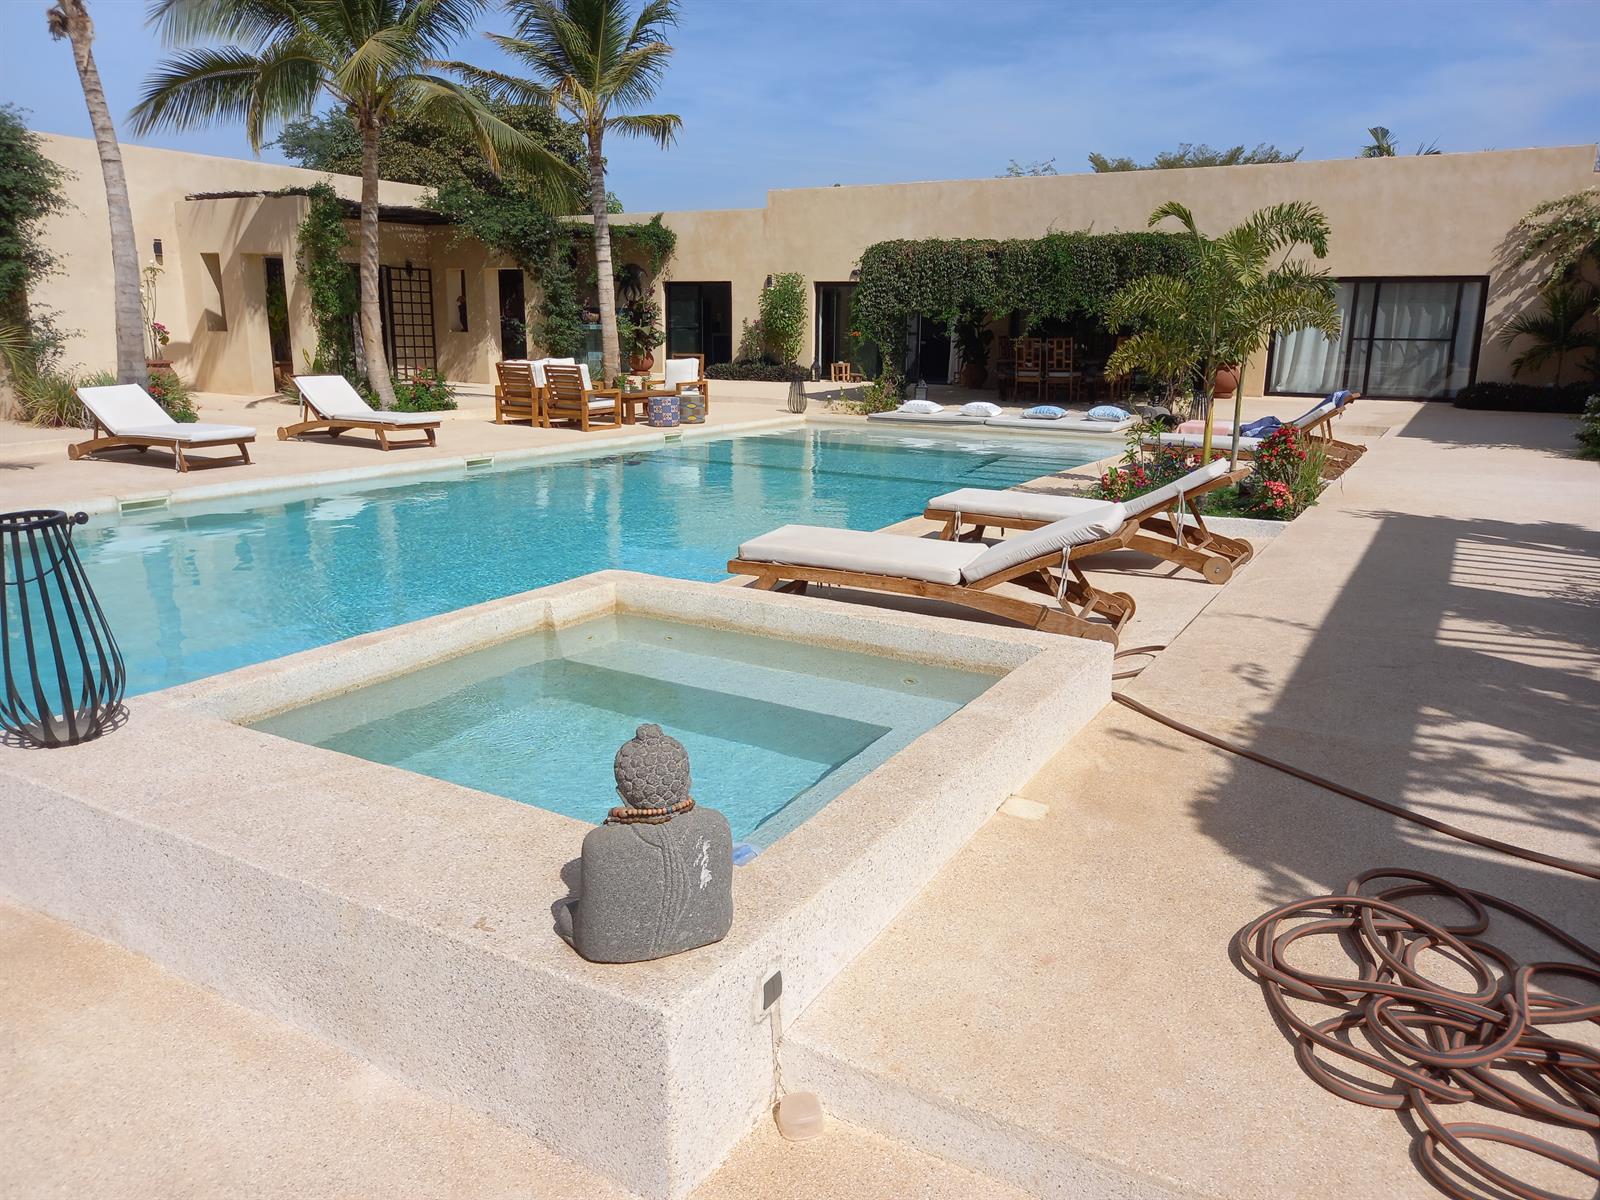 Magnifique villa avec piscine offrant de vastes espaces.